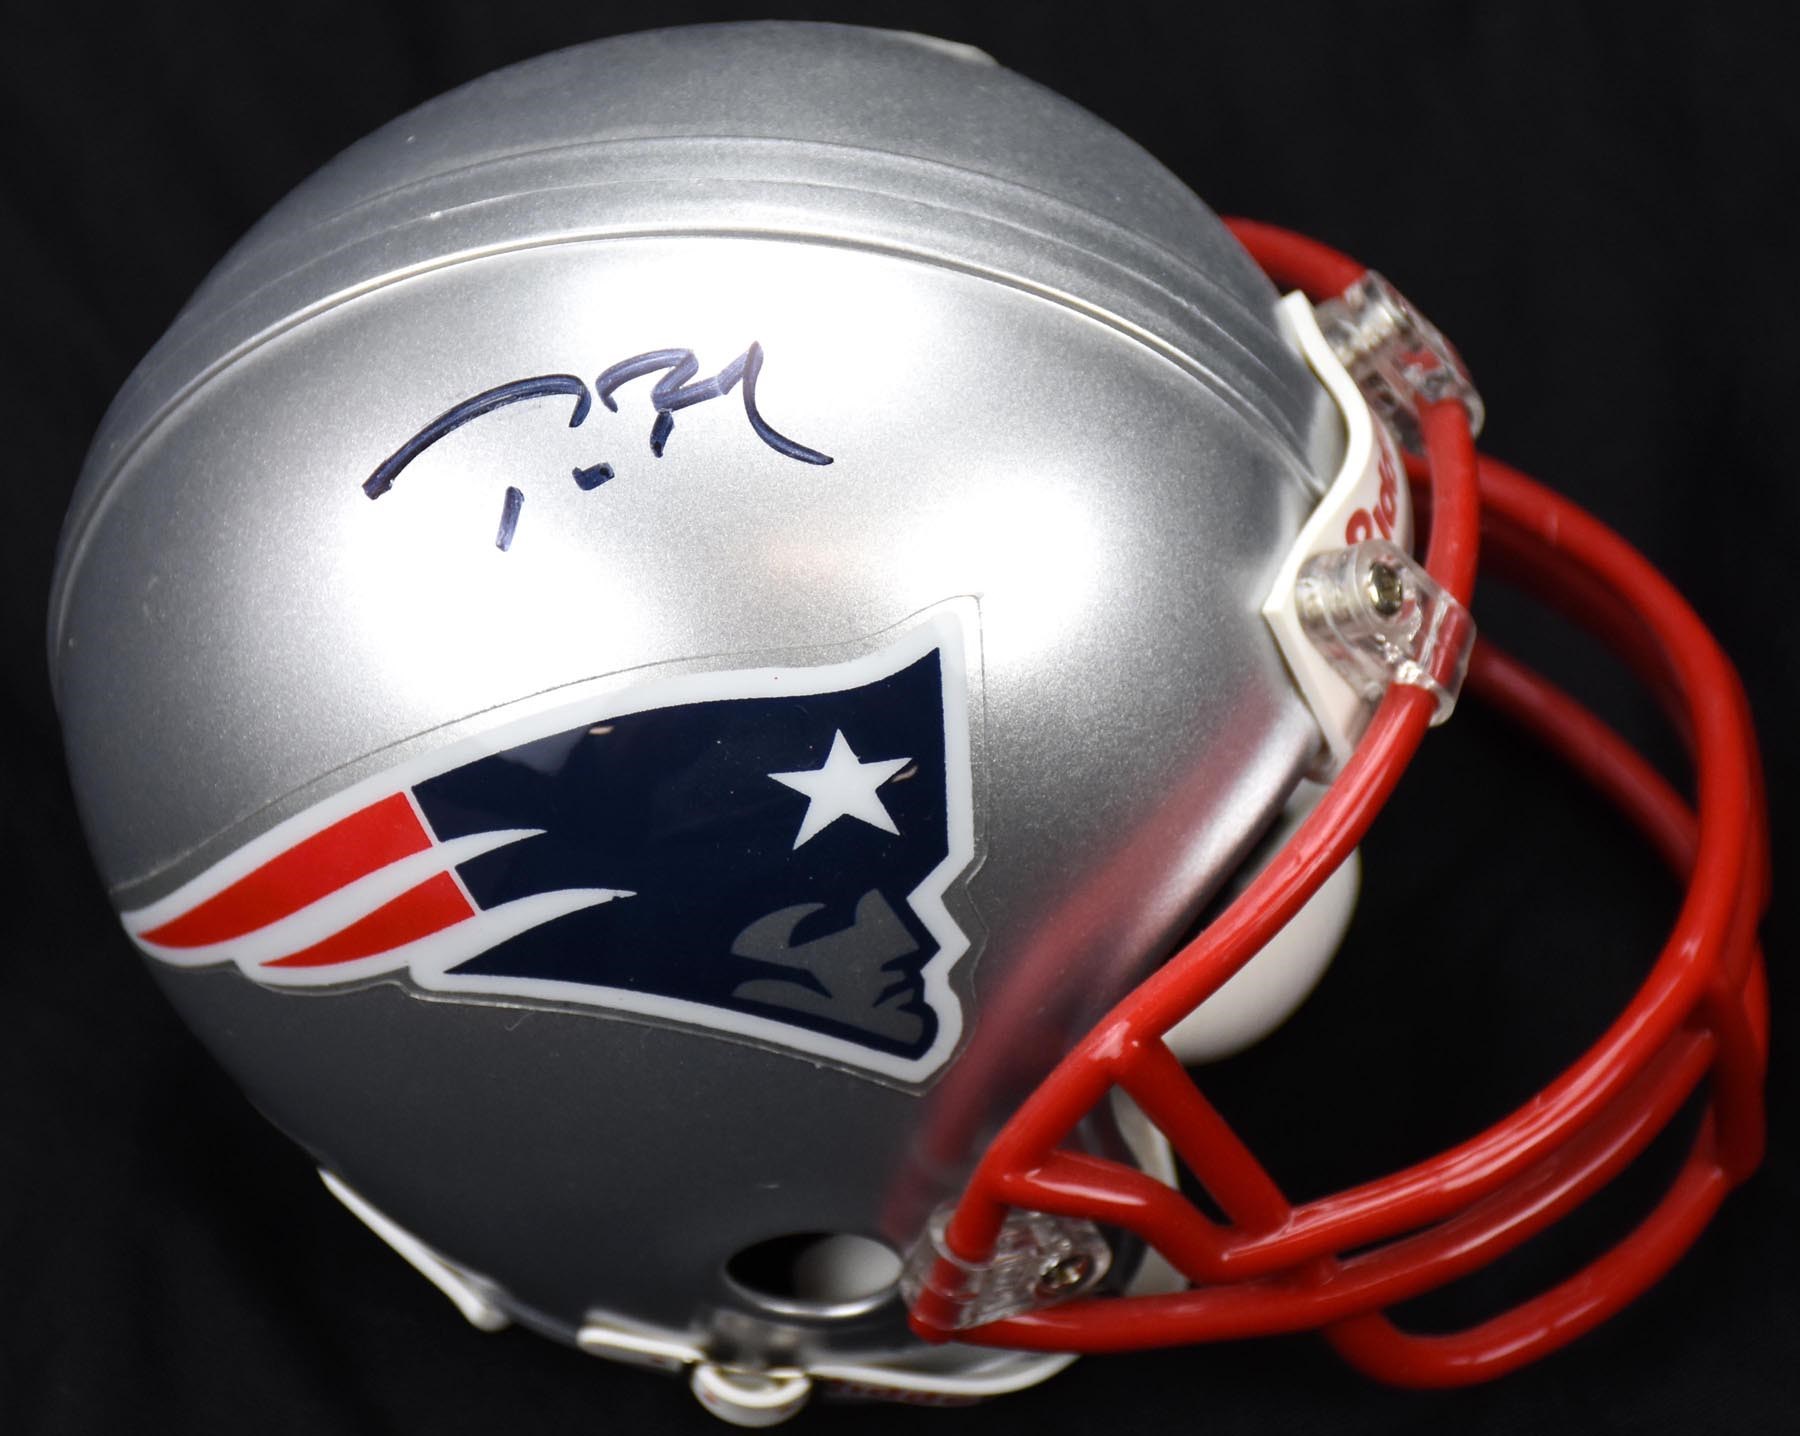 Boston Sports - Tom Brady Signed Mini Helmet